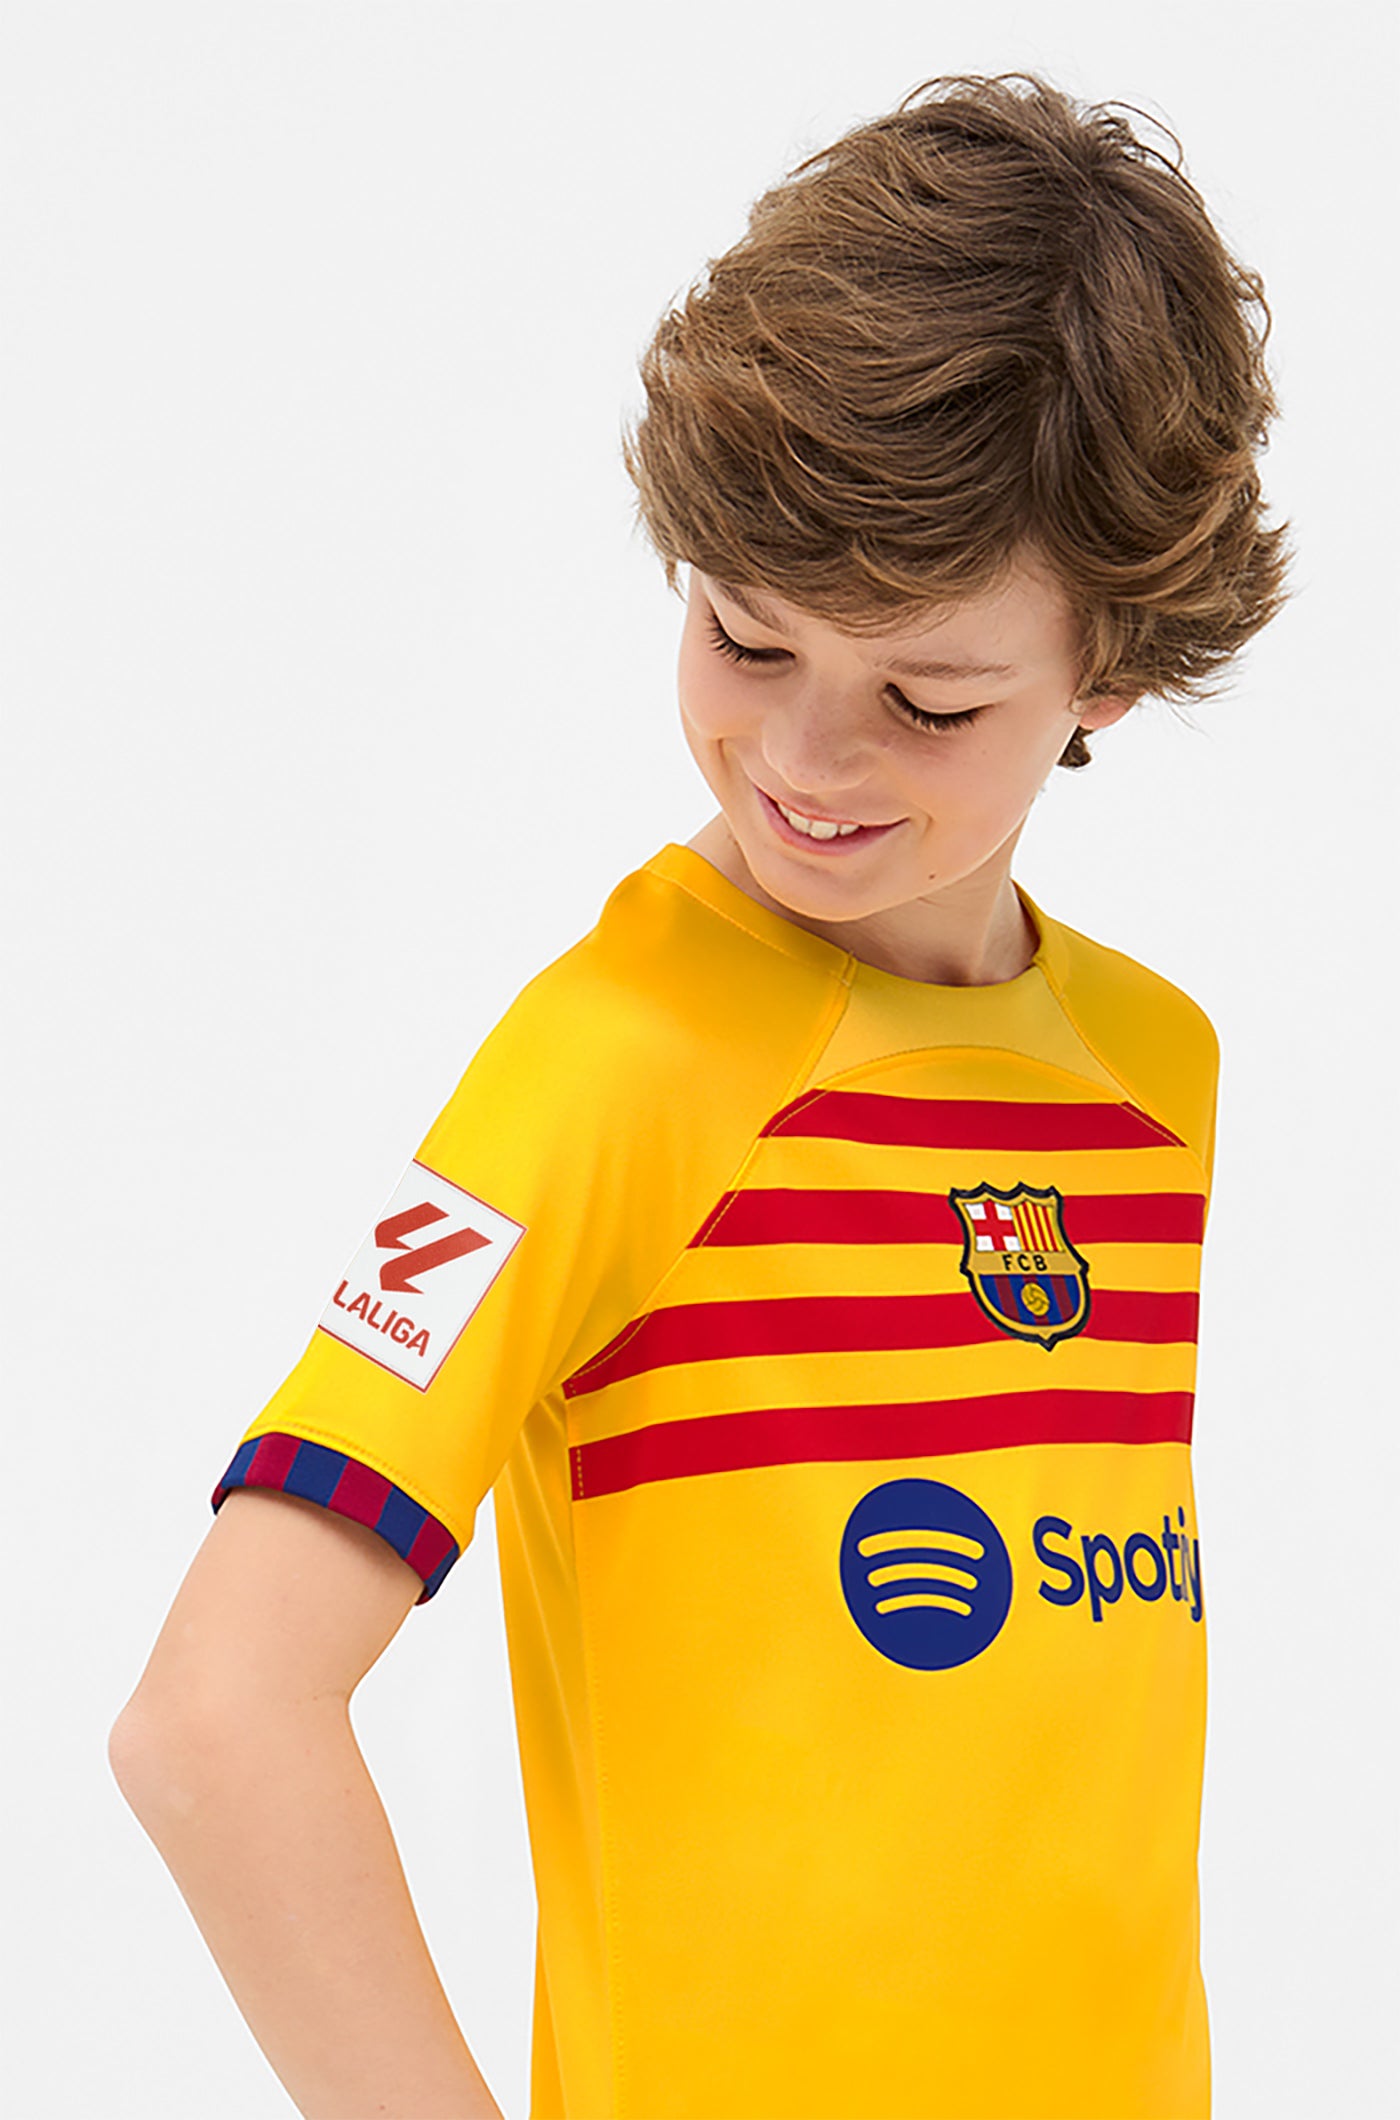 LFP  FC Barcelona fourth shirt 23/24 – Junior  - KOUNDE